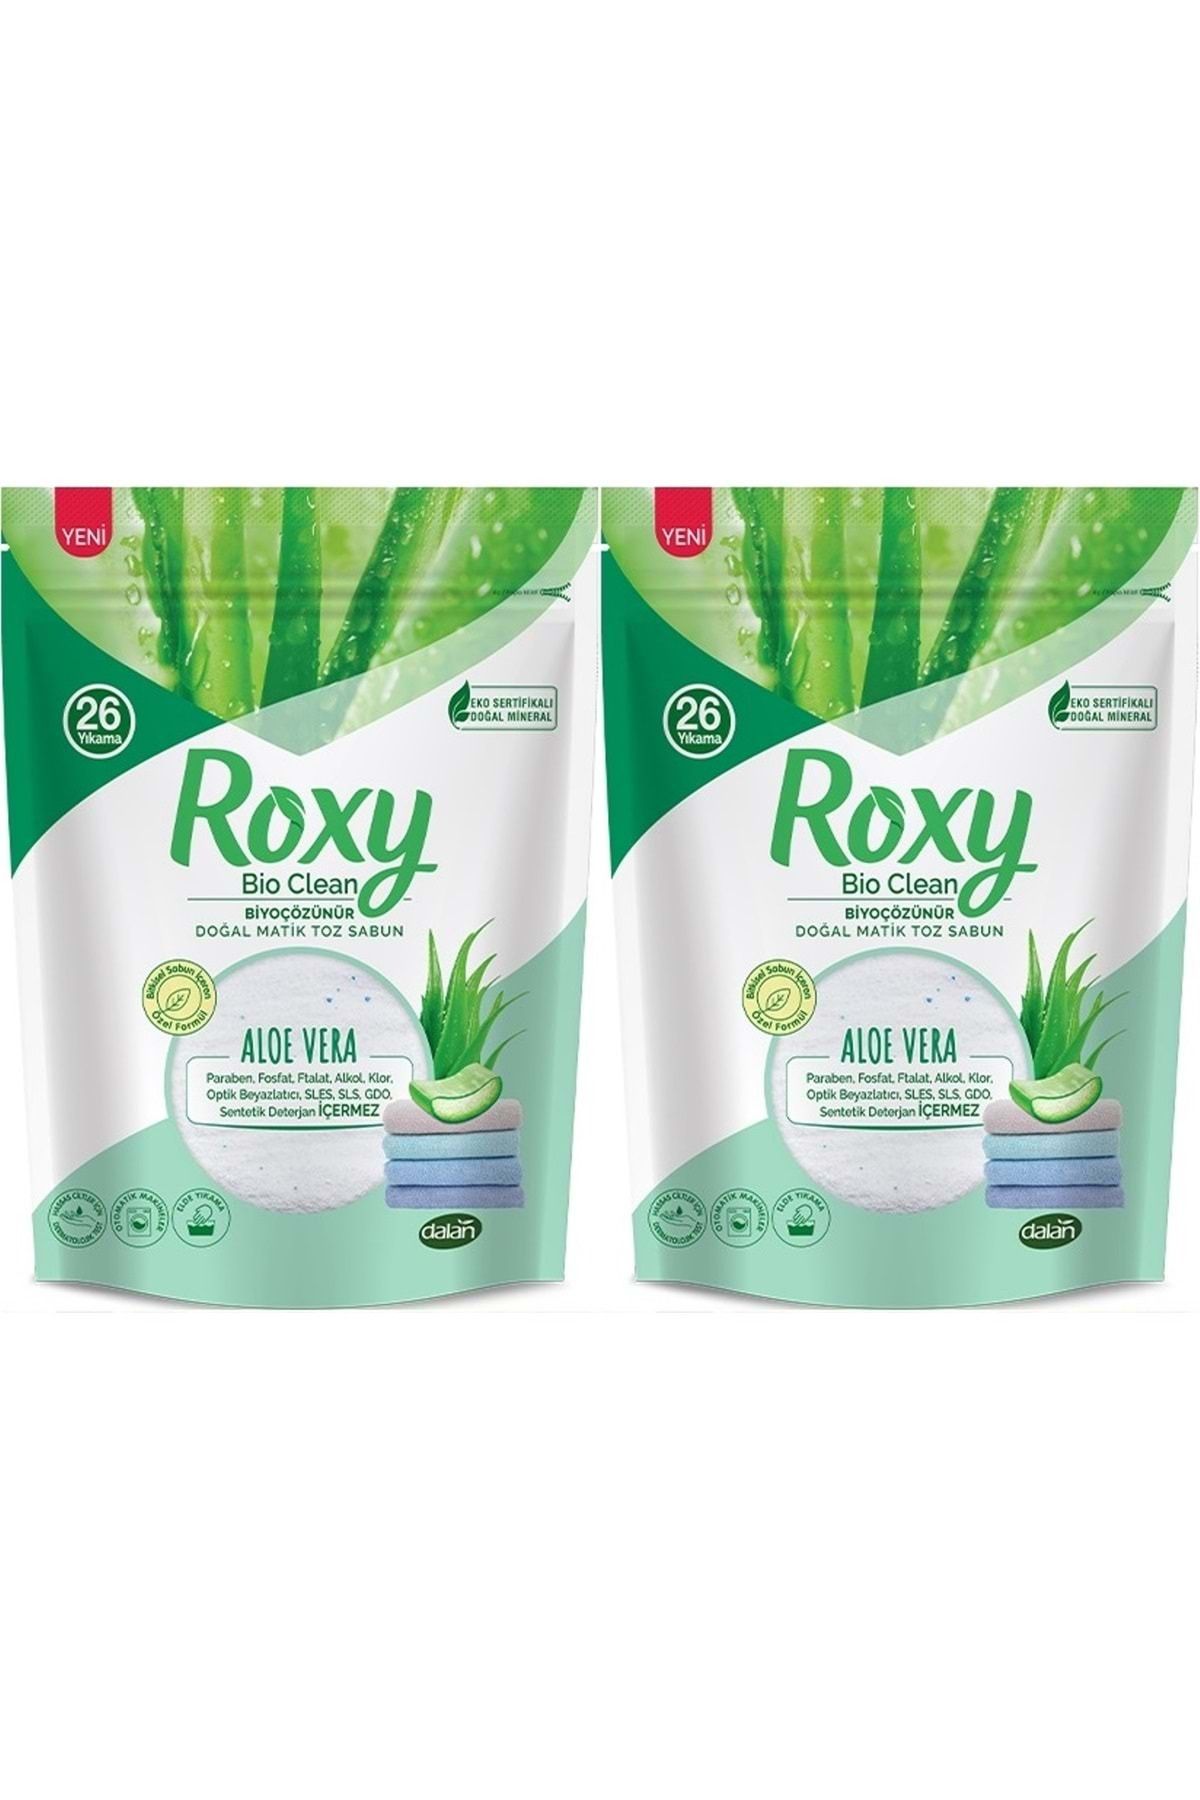 Dalan Roxy Bio Clean Matik Sabun Tozu 800gr Aloe Vera (2 Li Set) (52 Yıkama)